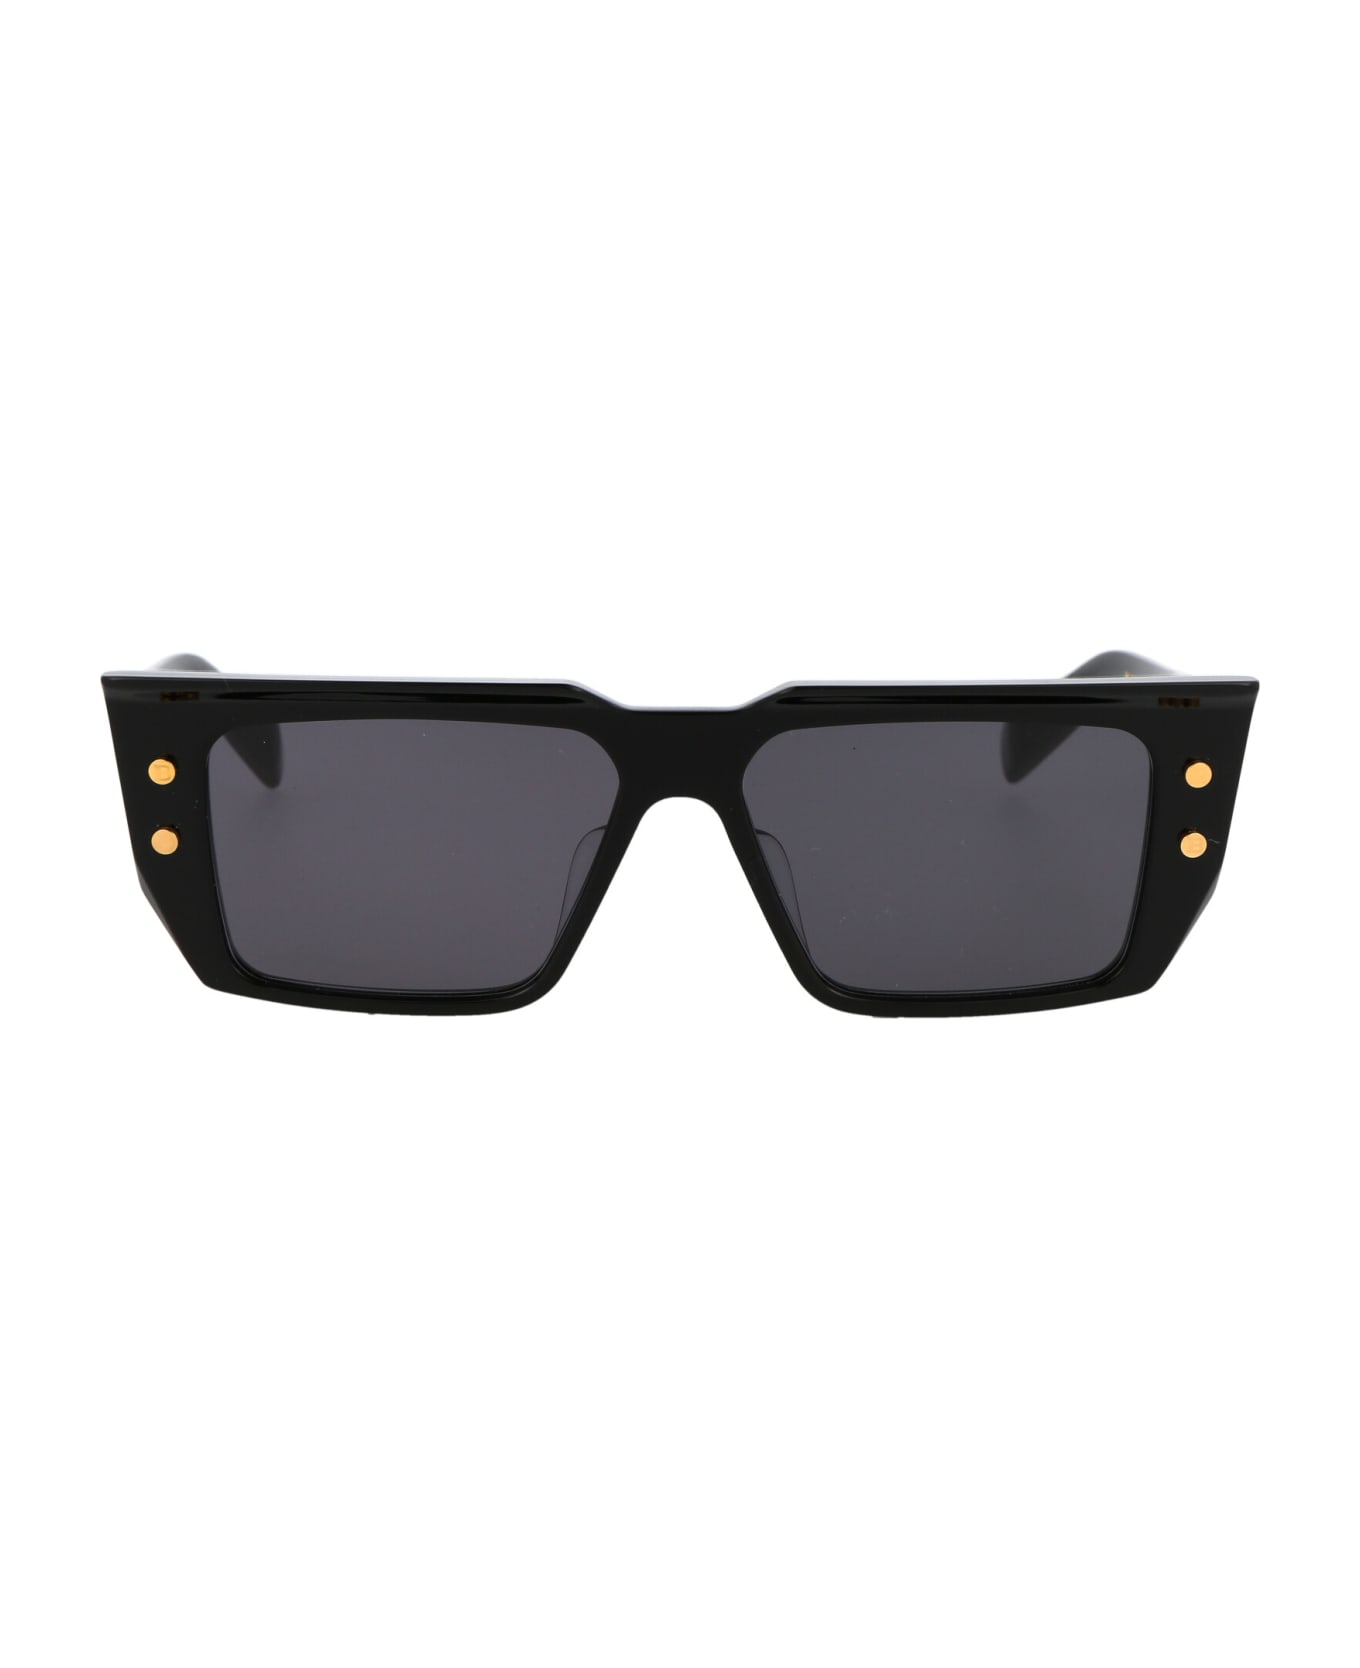 Balmain B - Vi Sunglasses - BLACK GOLD W/ DARK GREY